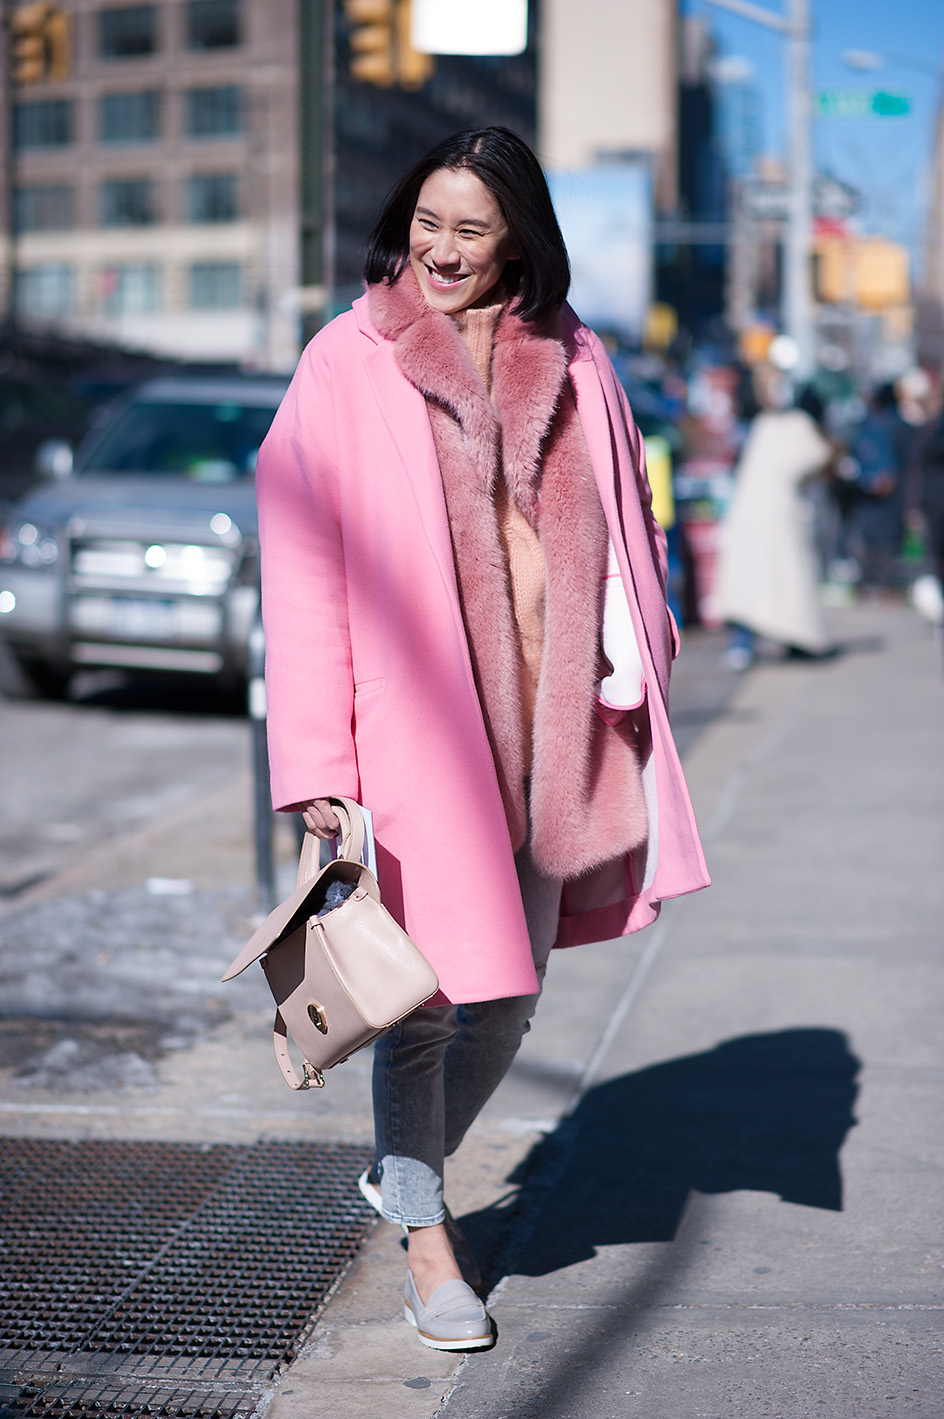 New York woman fashion Week Fall Winter 2015-16
Street Style